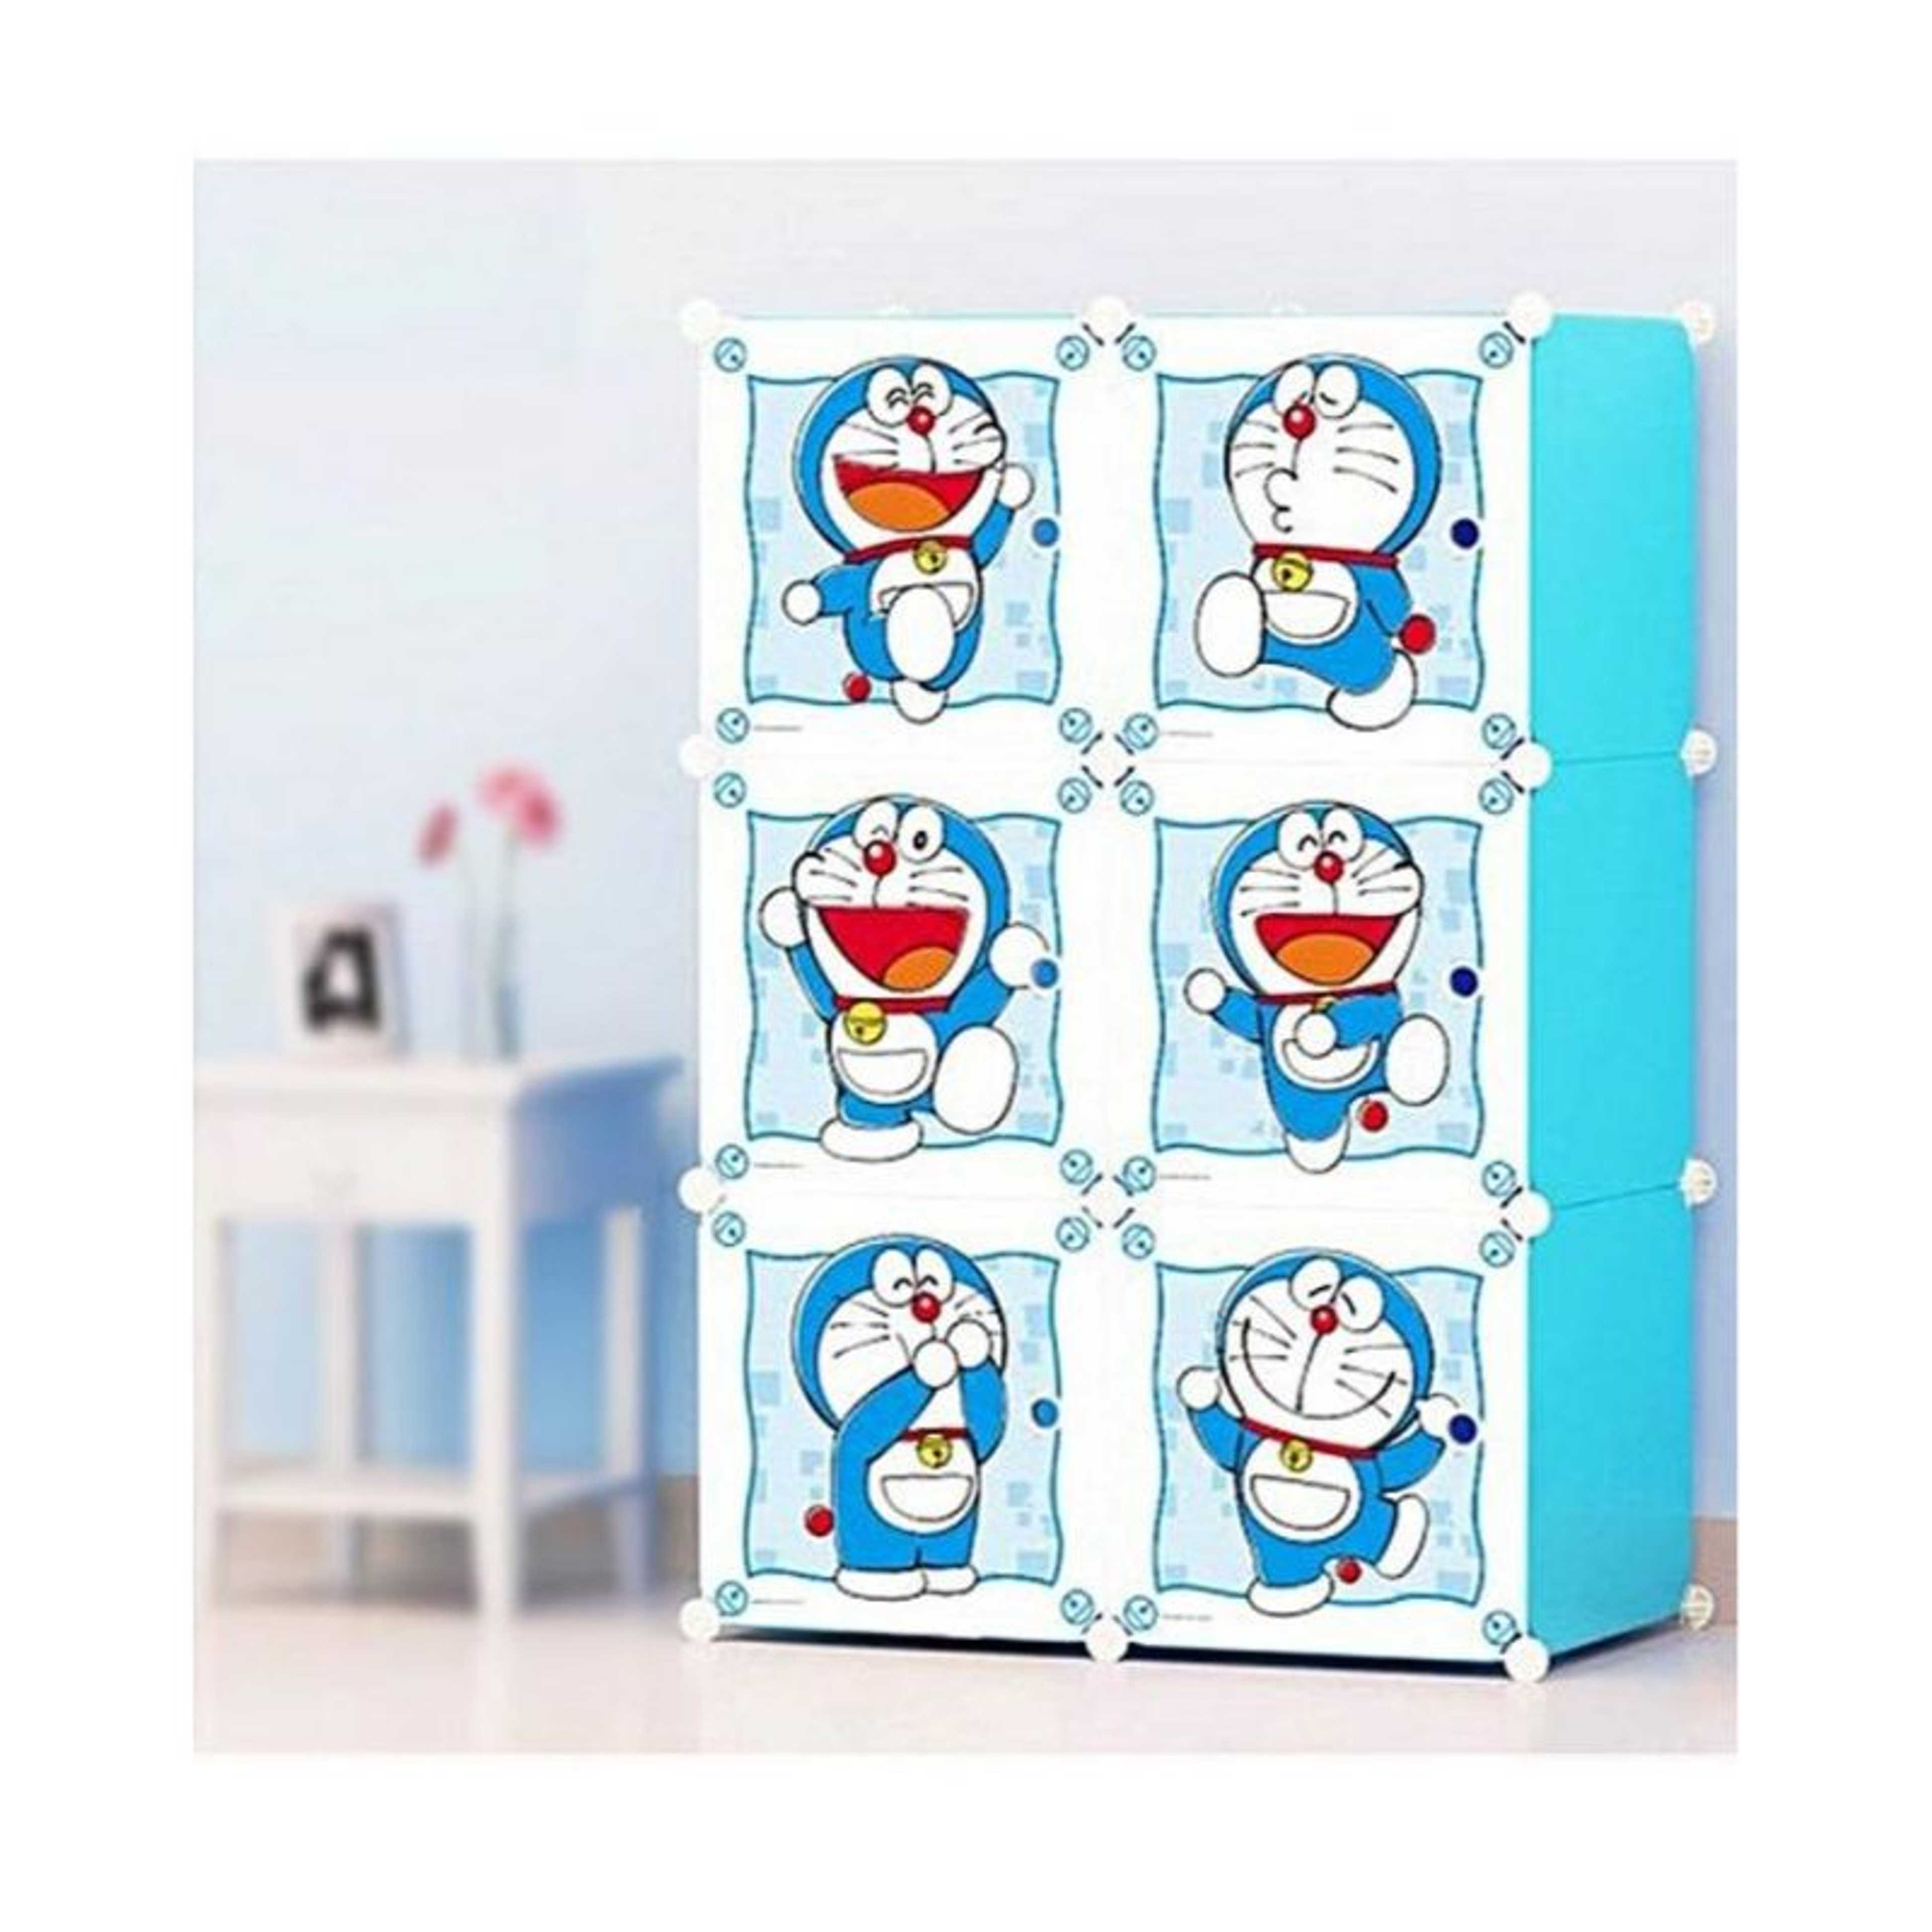 6 Cubic Plastic Doraemon Cabinets With Magnetic Doors - Blue